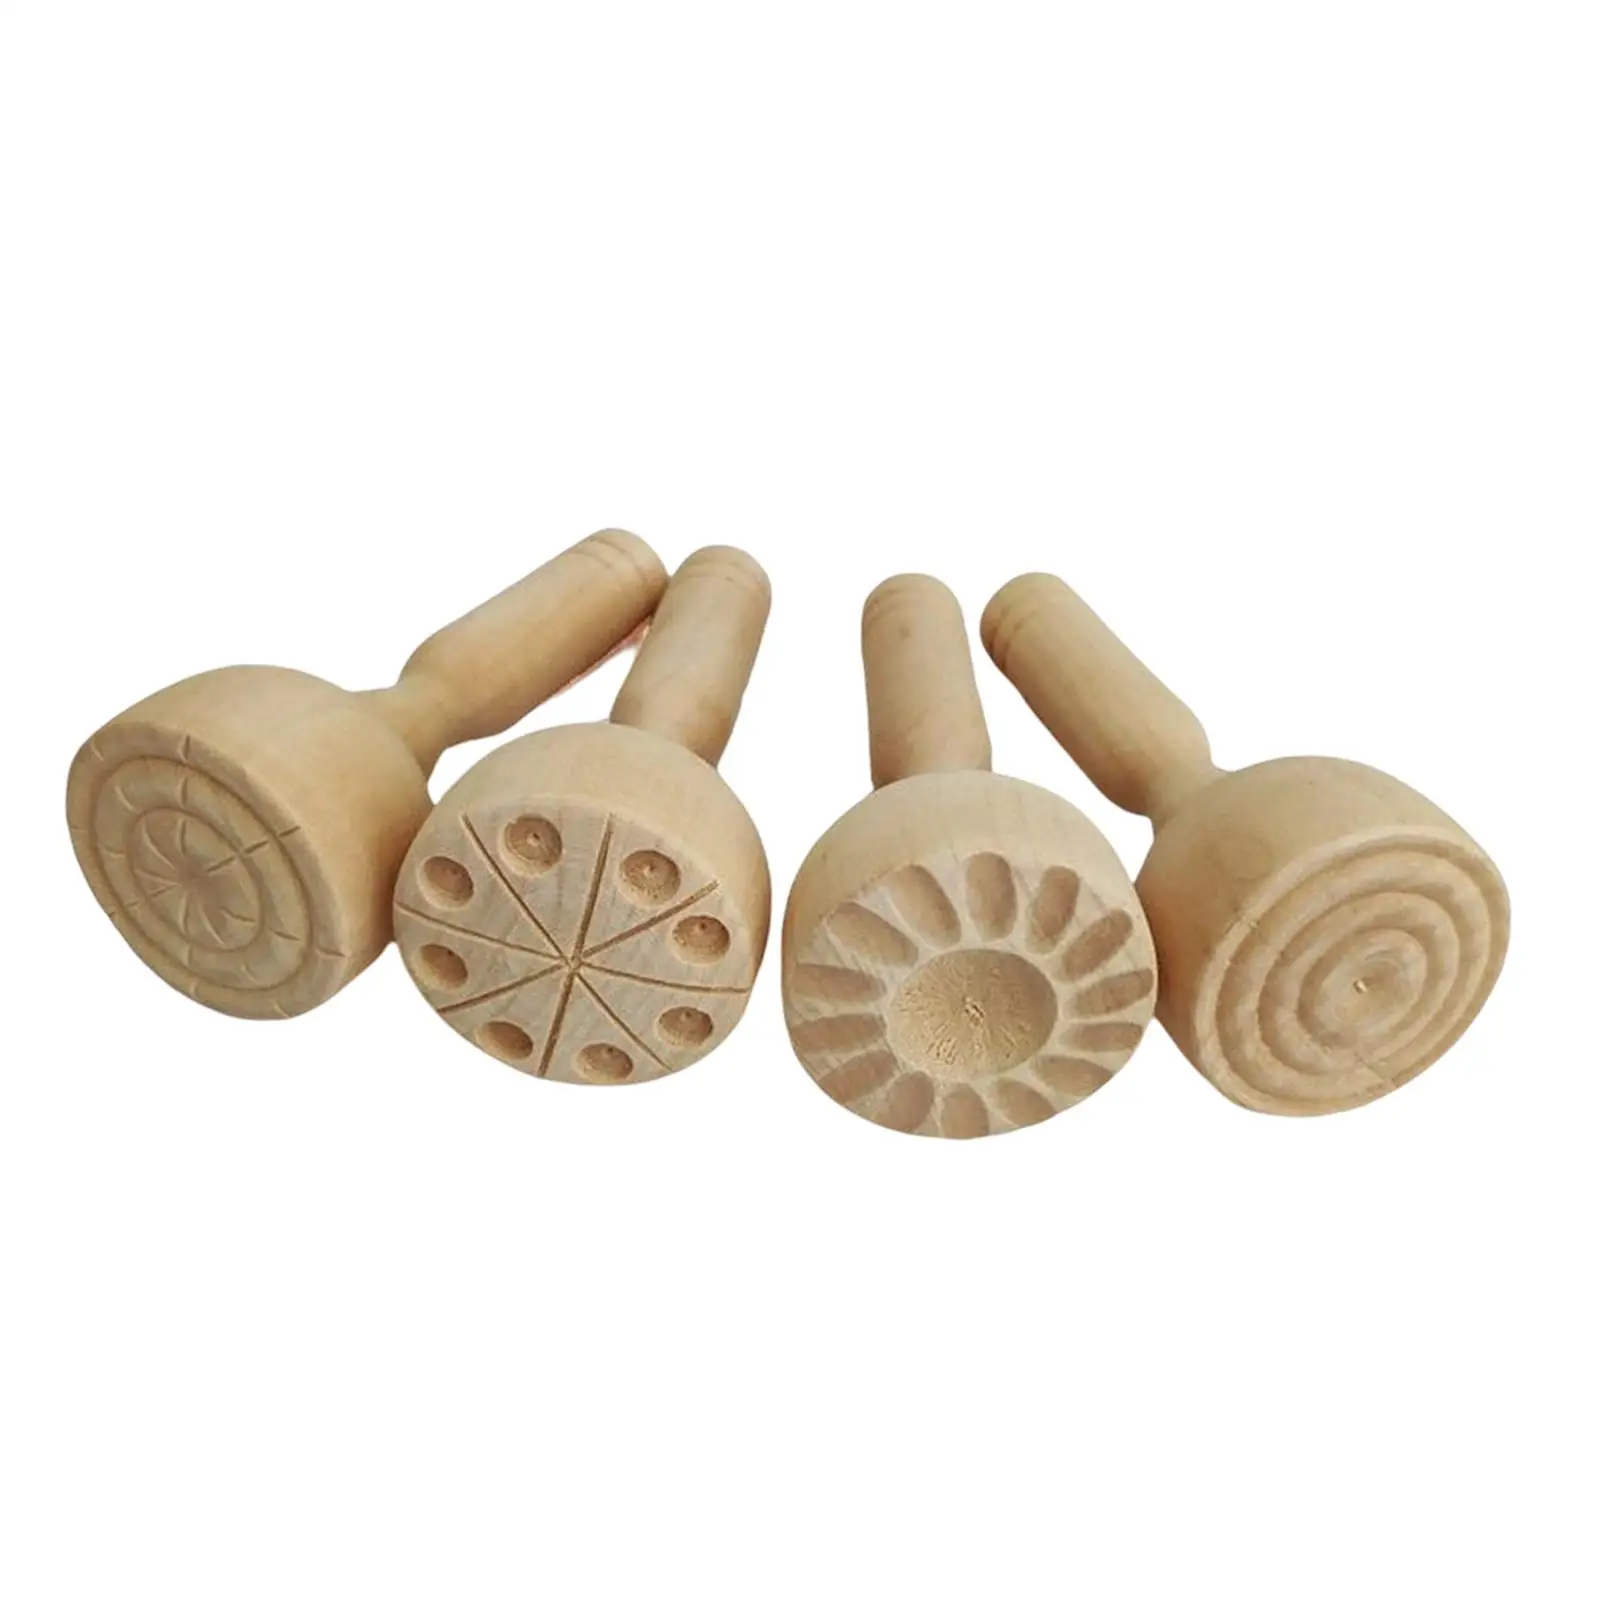 4Pcs Wooden seal Moulds mould Supplies Educational toys Child